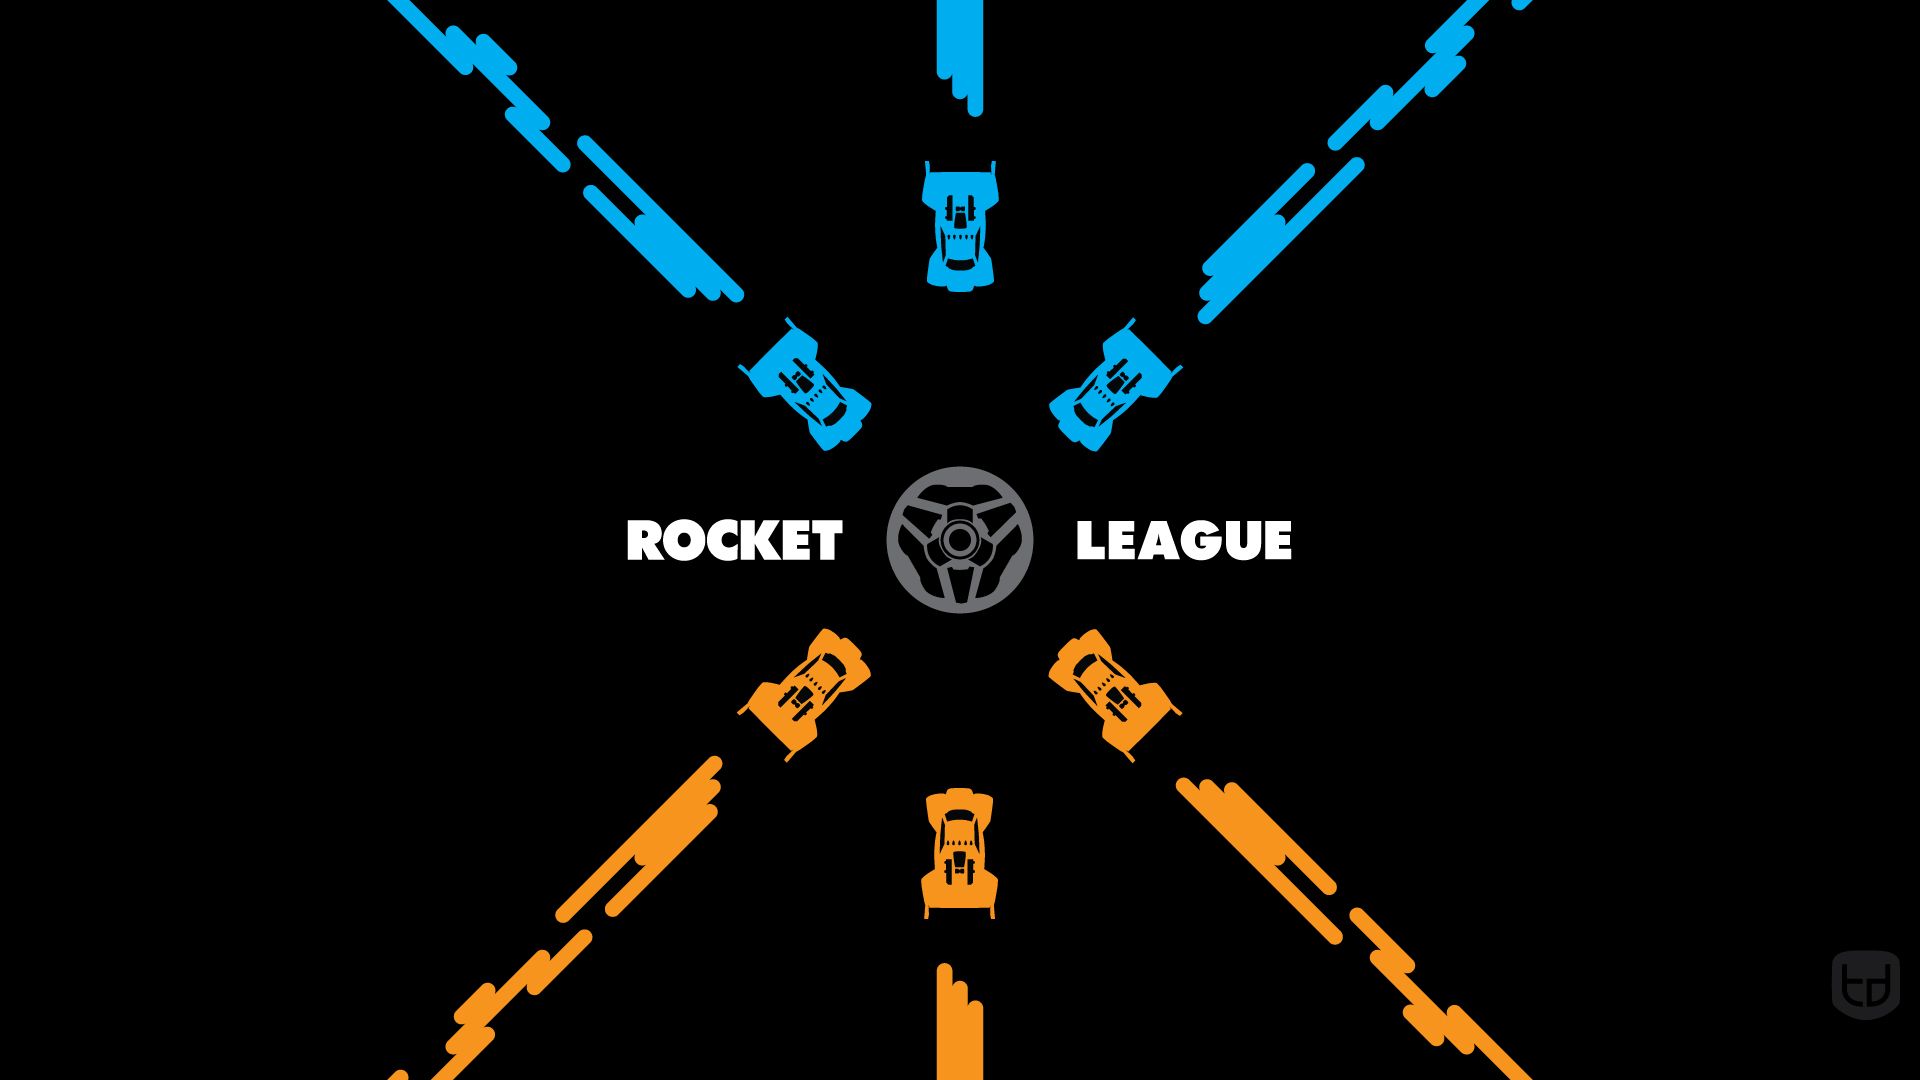 Rocket League Wallpaper. You're welcome